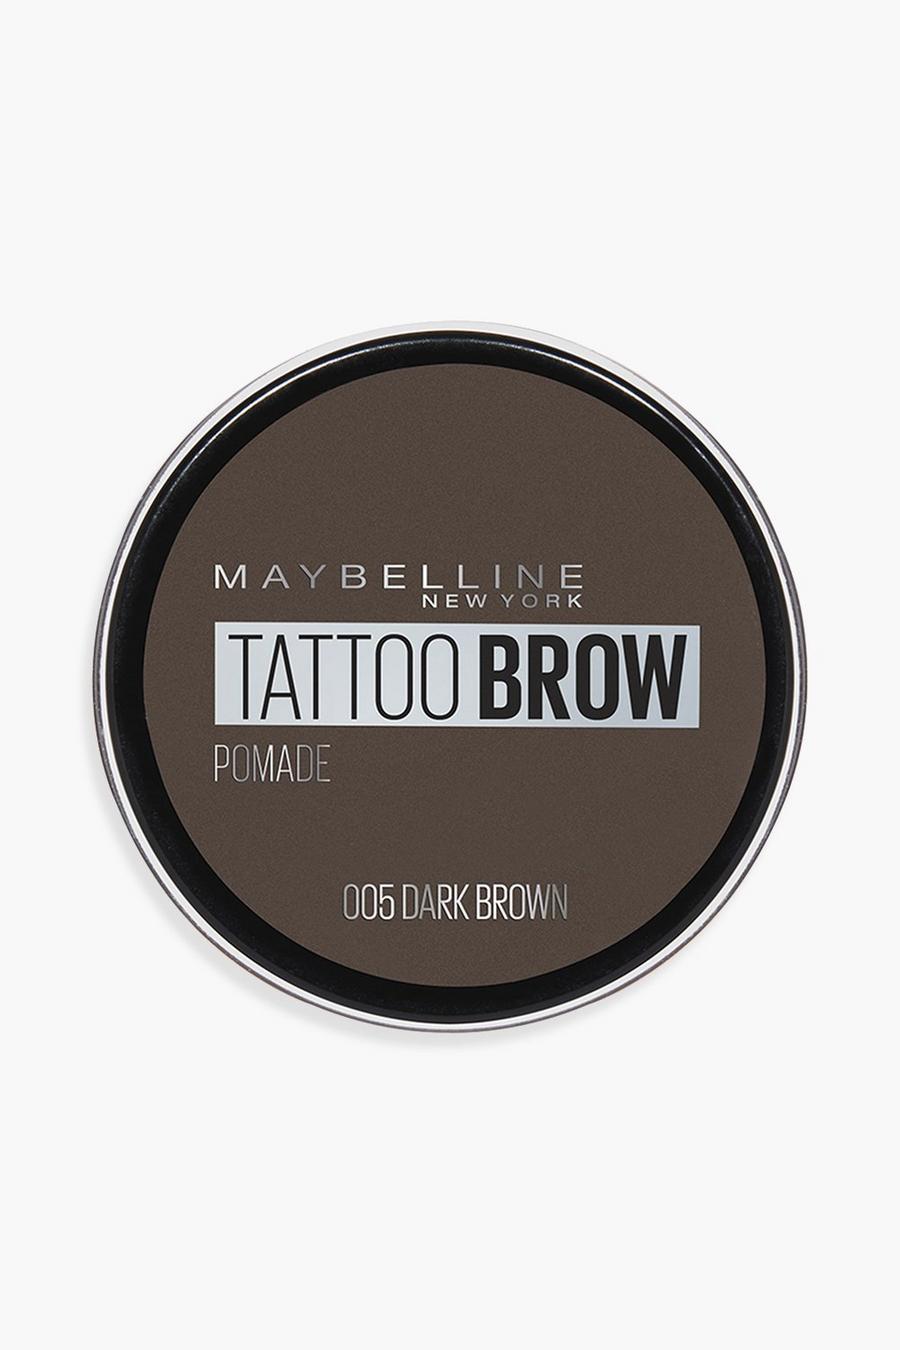 05 dark brown Maybelline Tattoo Brow Eyebrow Pomade